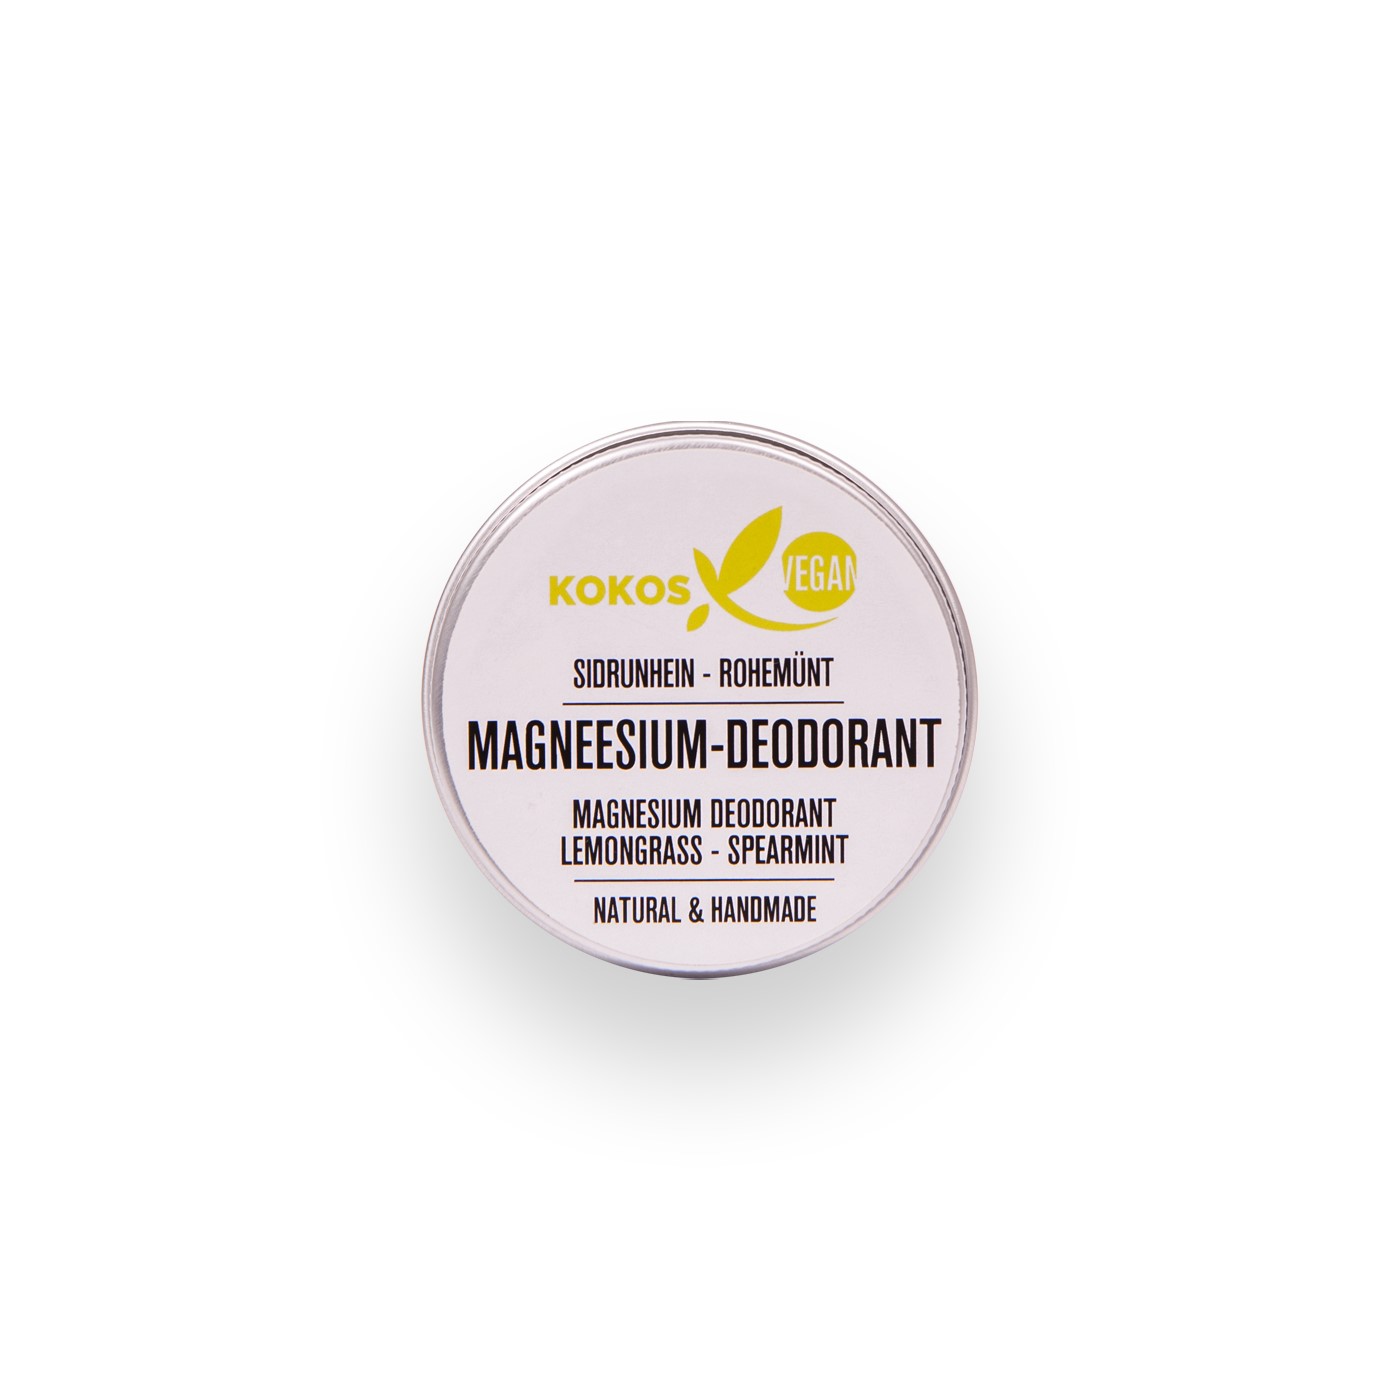 Mg deodorant30 sidrunhein (2)